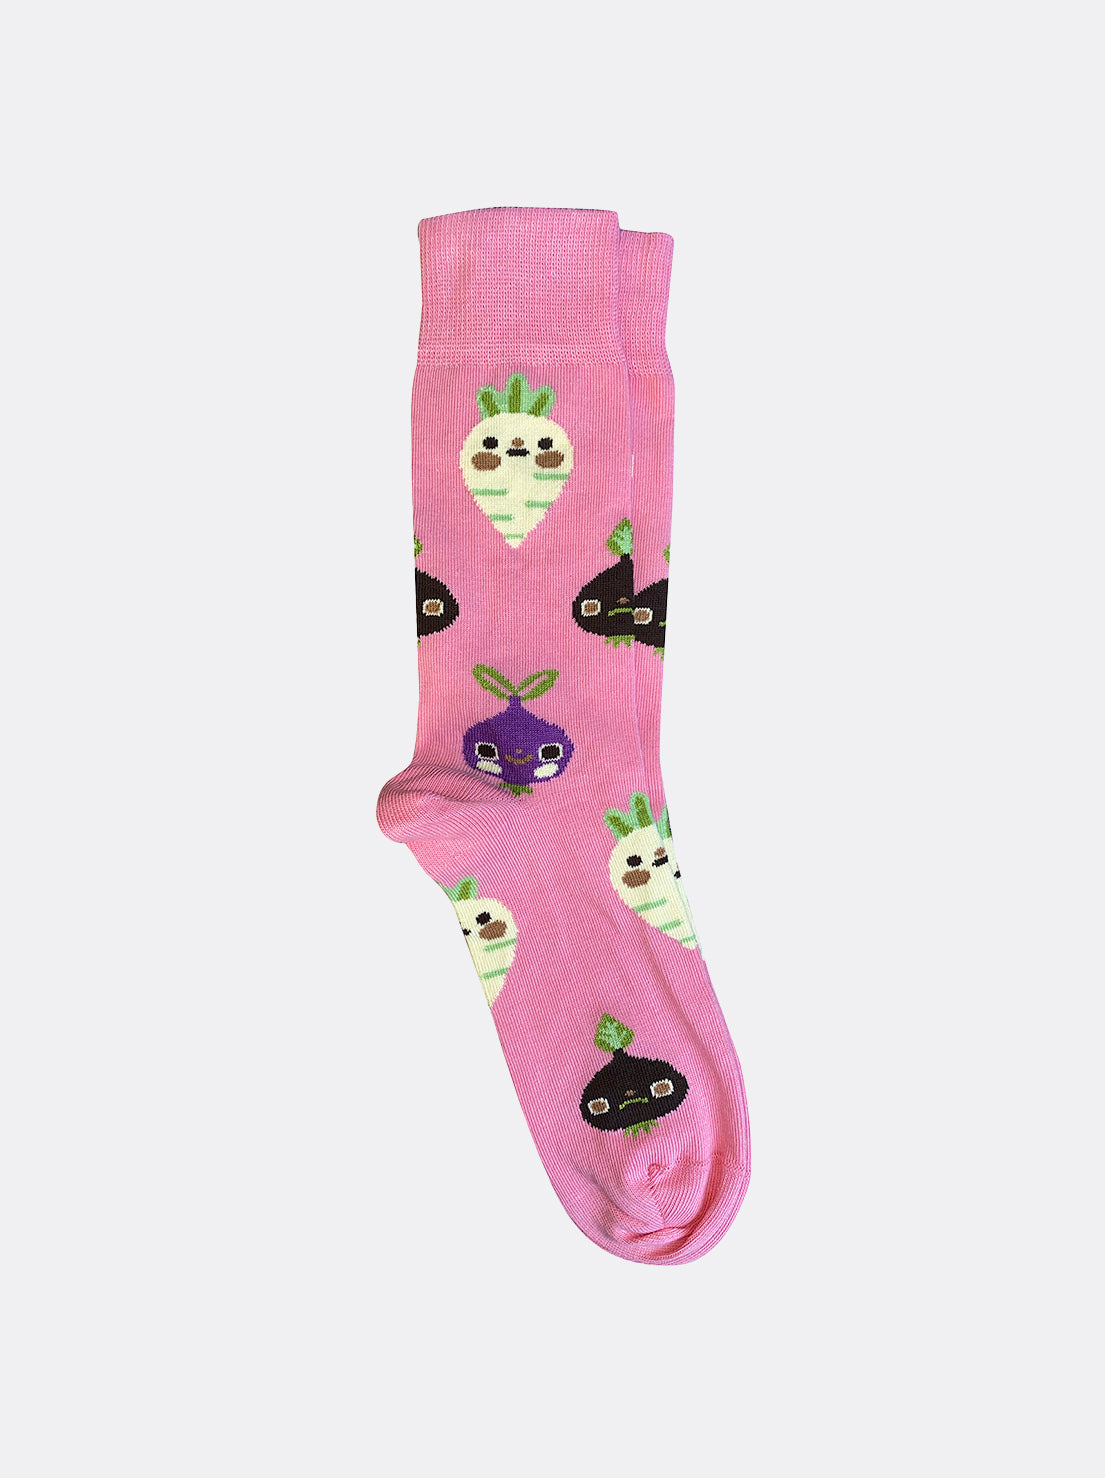 Tightology - Veggies Socks - Pink